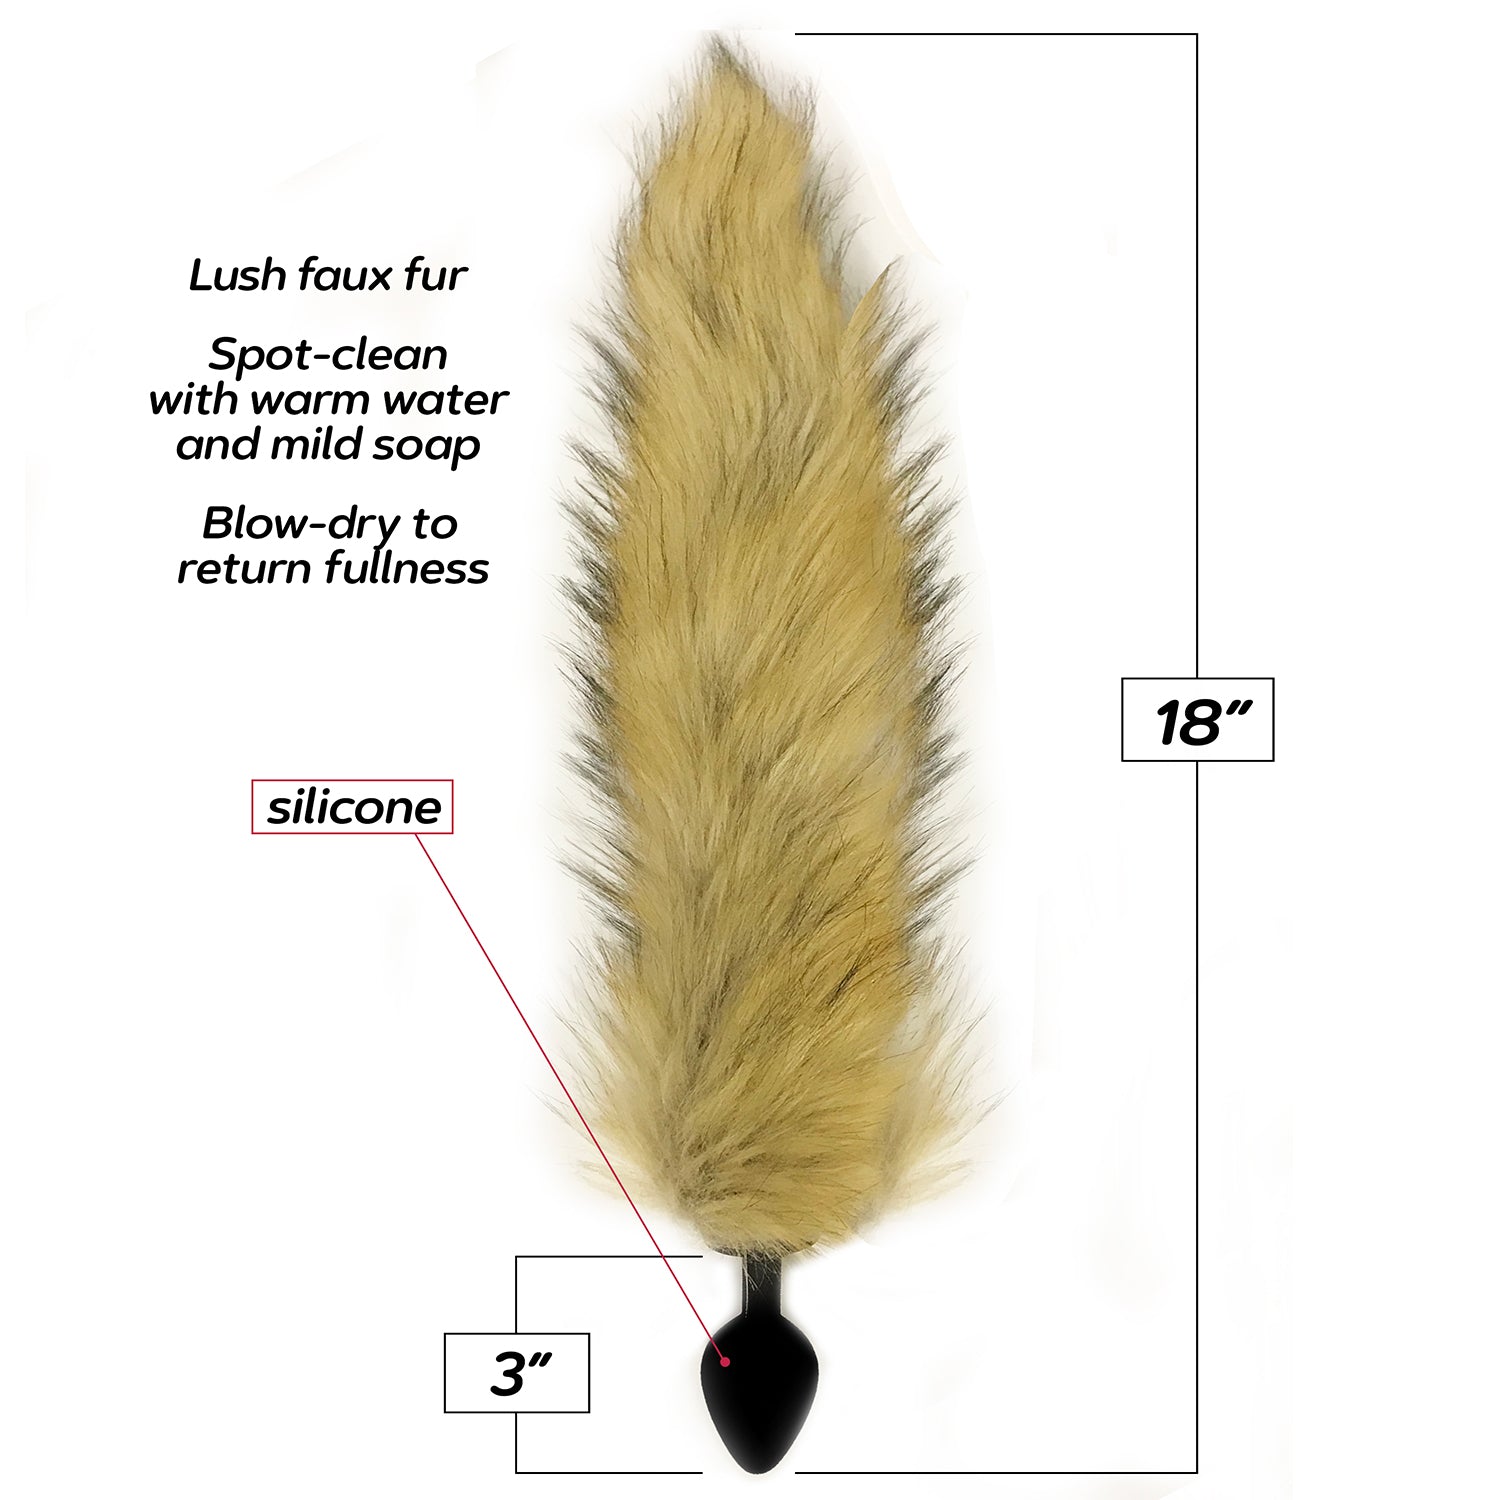 Foxy Fox Tail Silicone Butt Plug